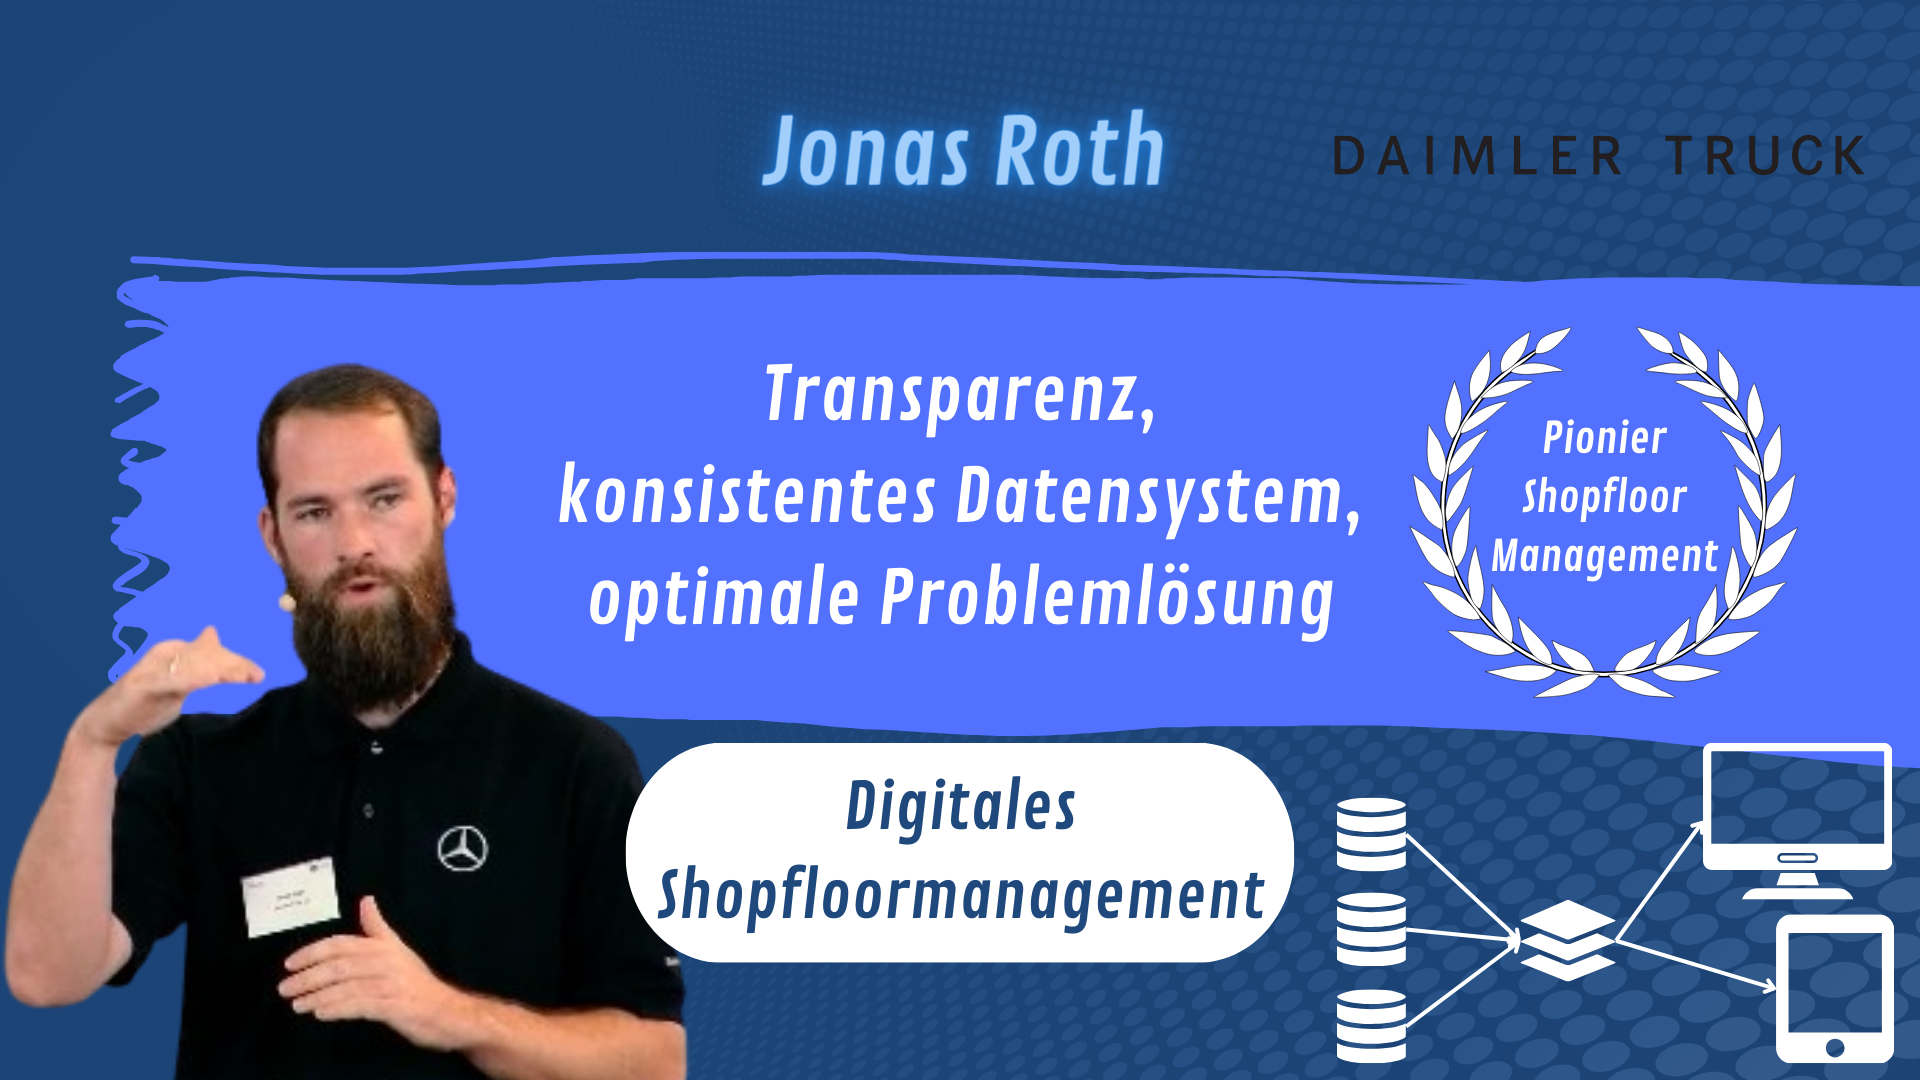 LEAN - Digital store floor management with Jonas Roth